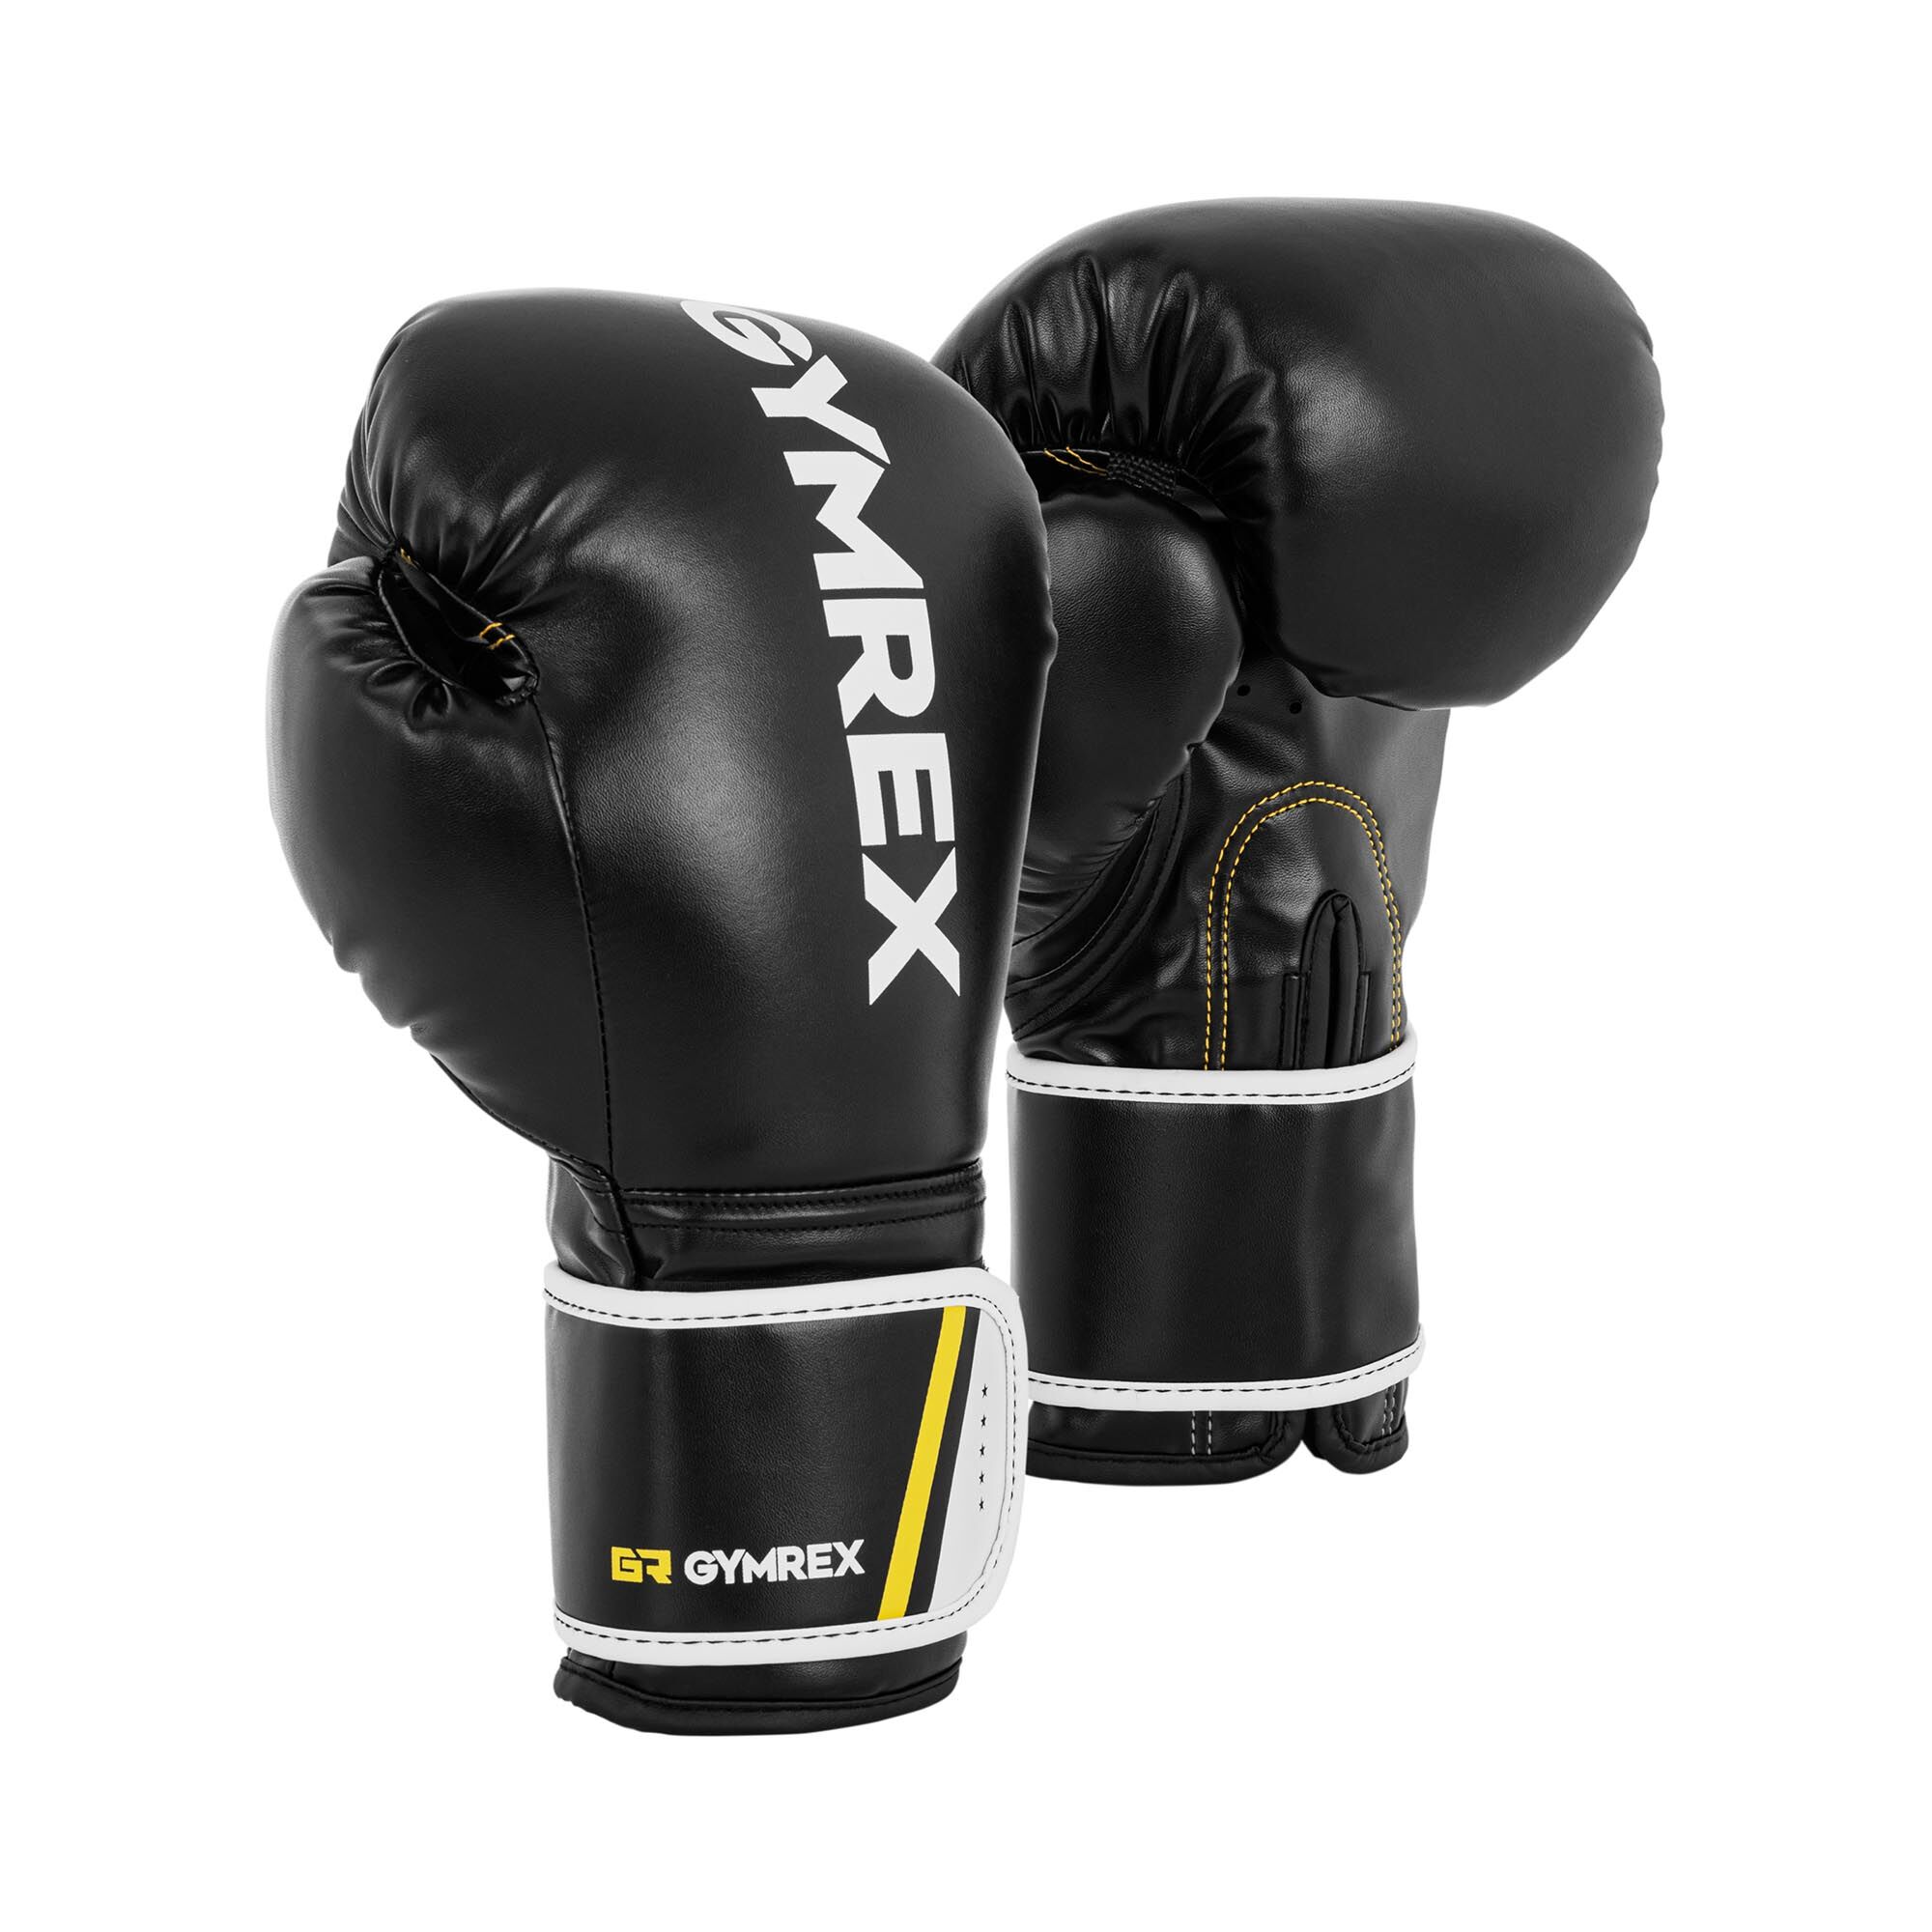 Gymrex Boxing Gloves - 14 oz - black